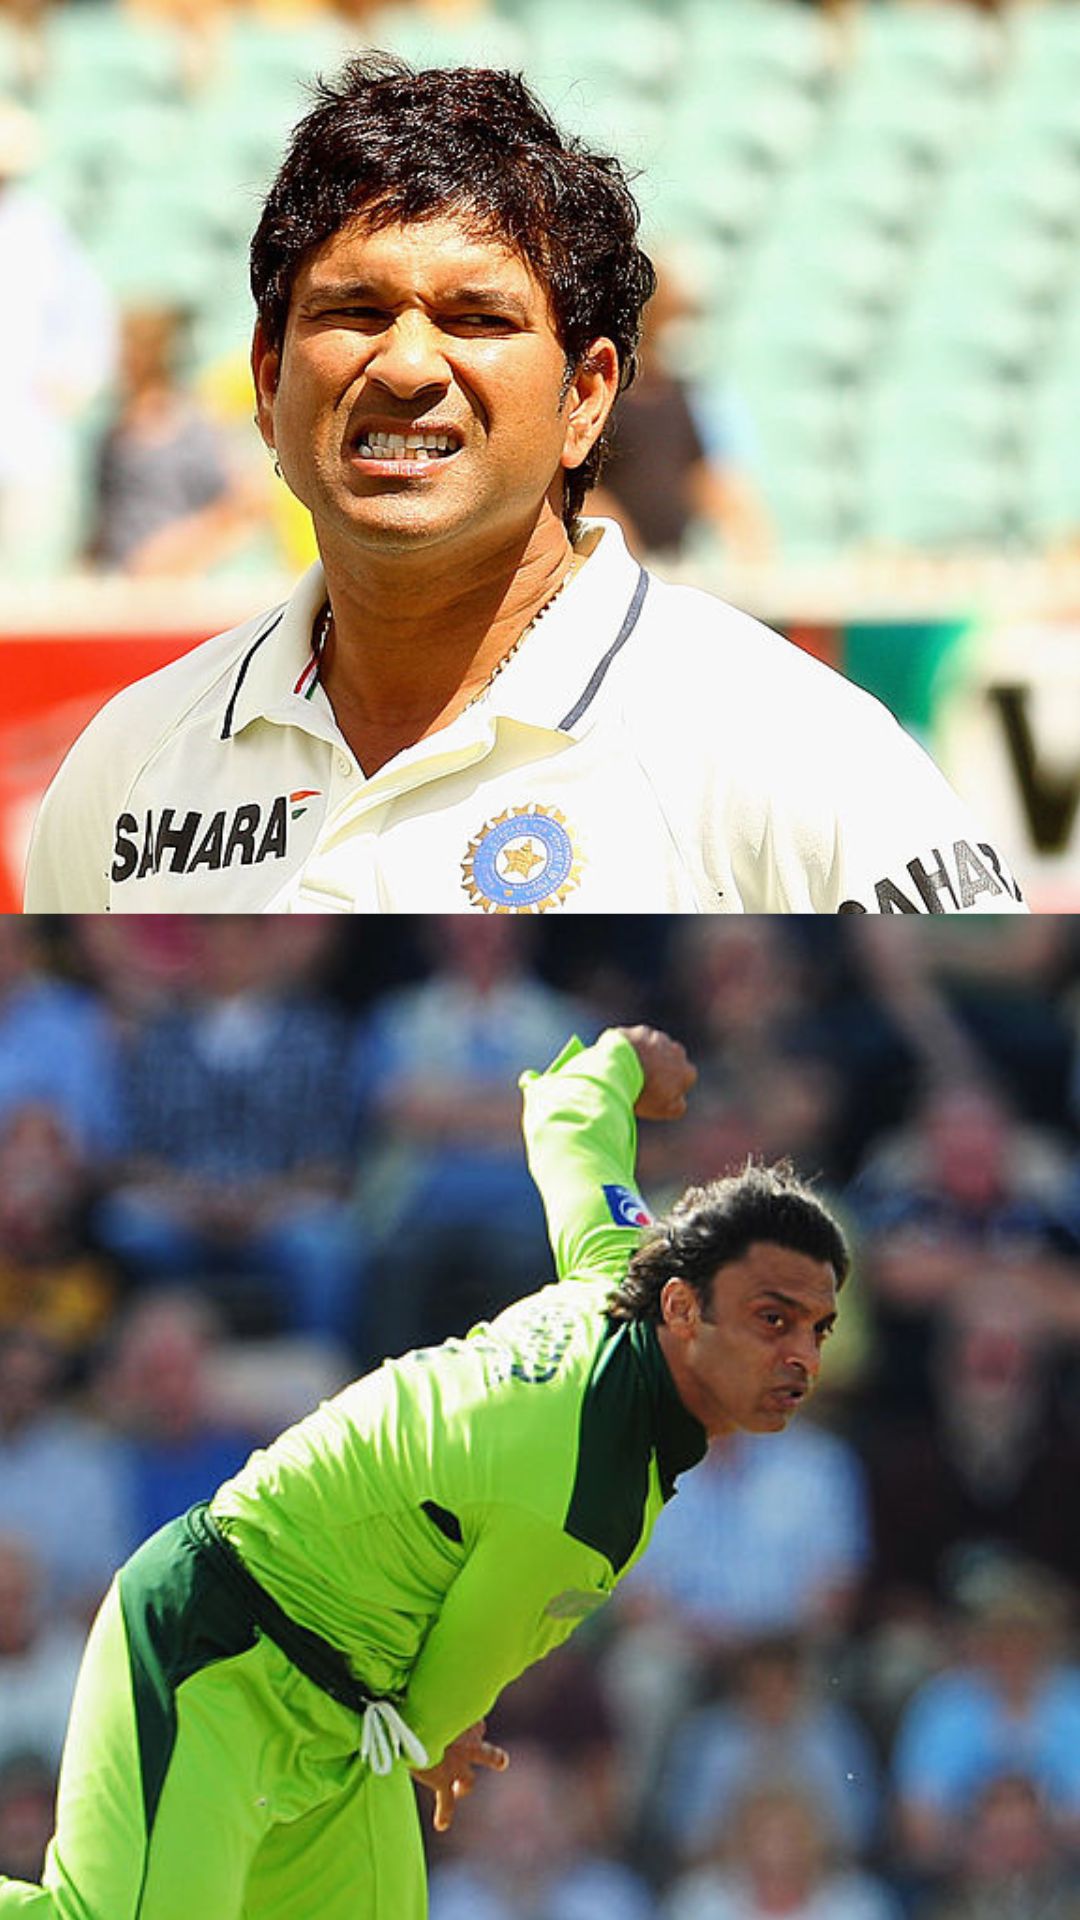 Sachin Tendulkar's Test and ODI record against Shoaib Akhtar